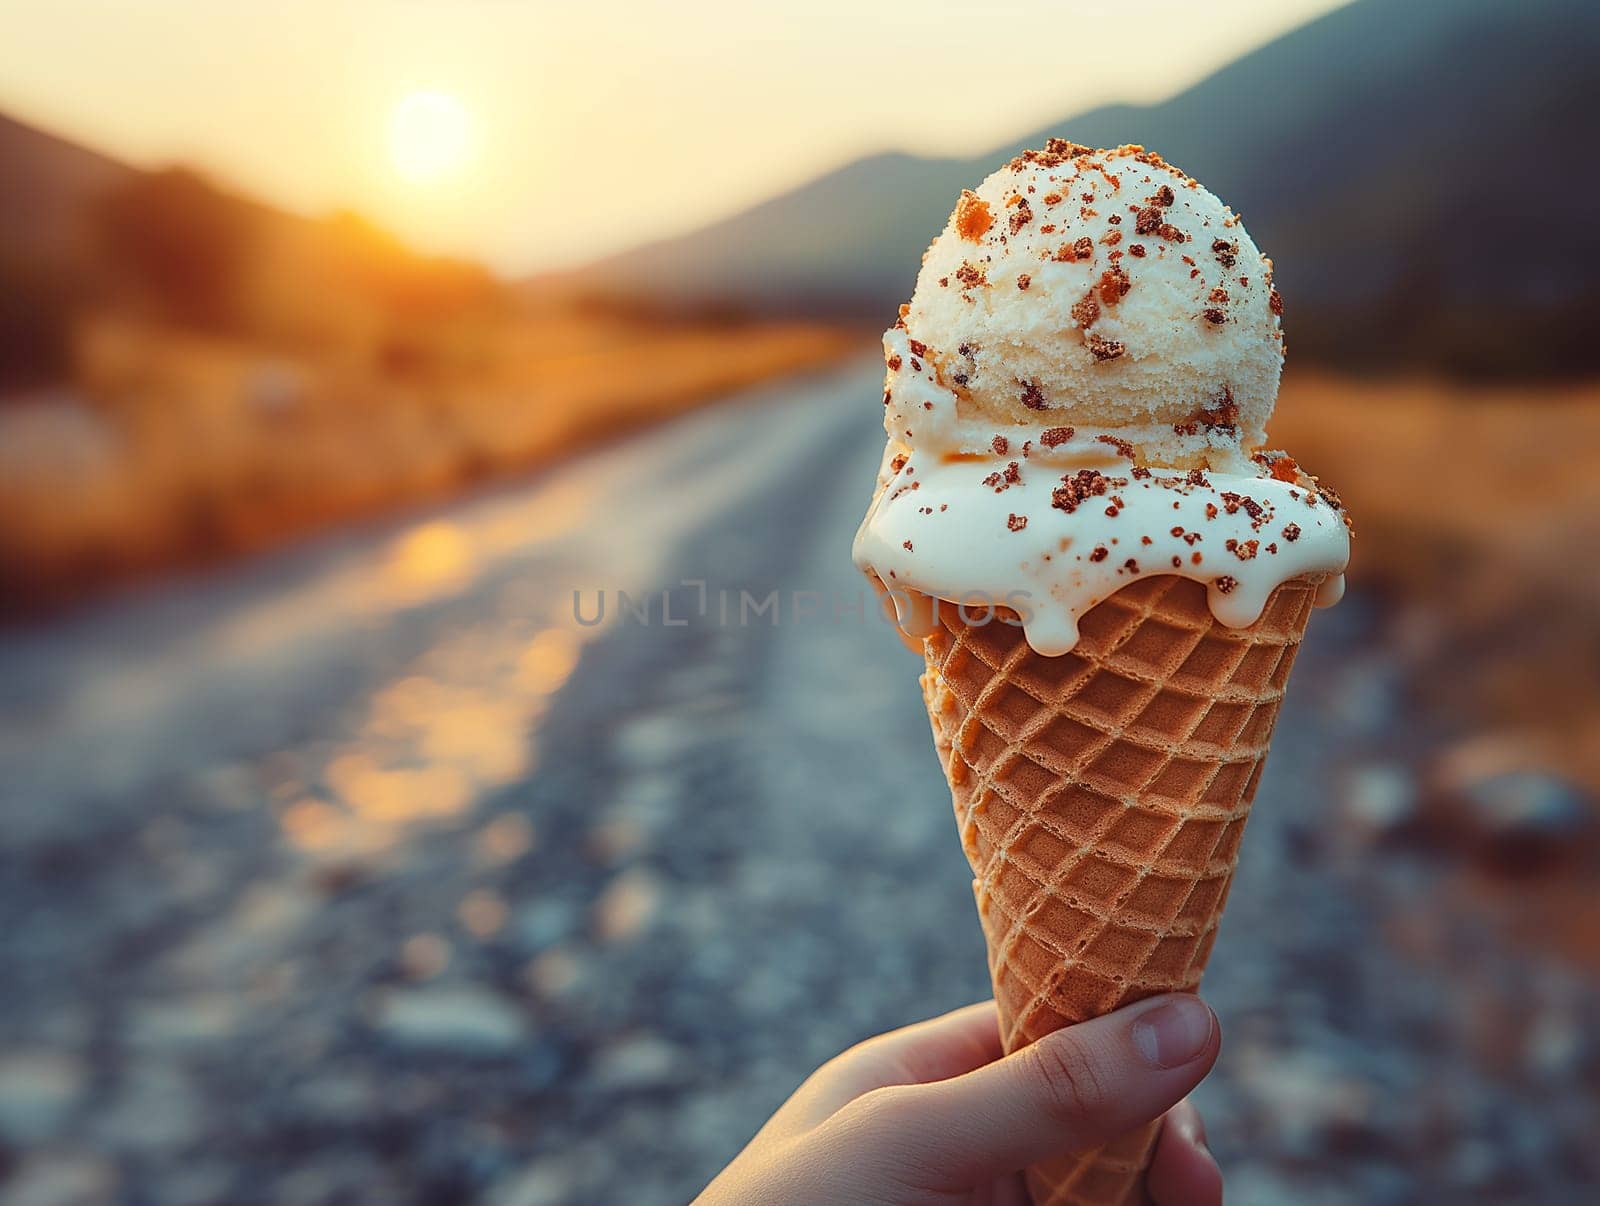 A single scoop of vanilla ice cream on a waffle cone.